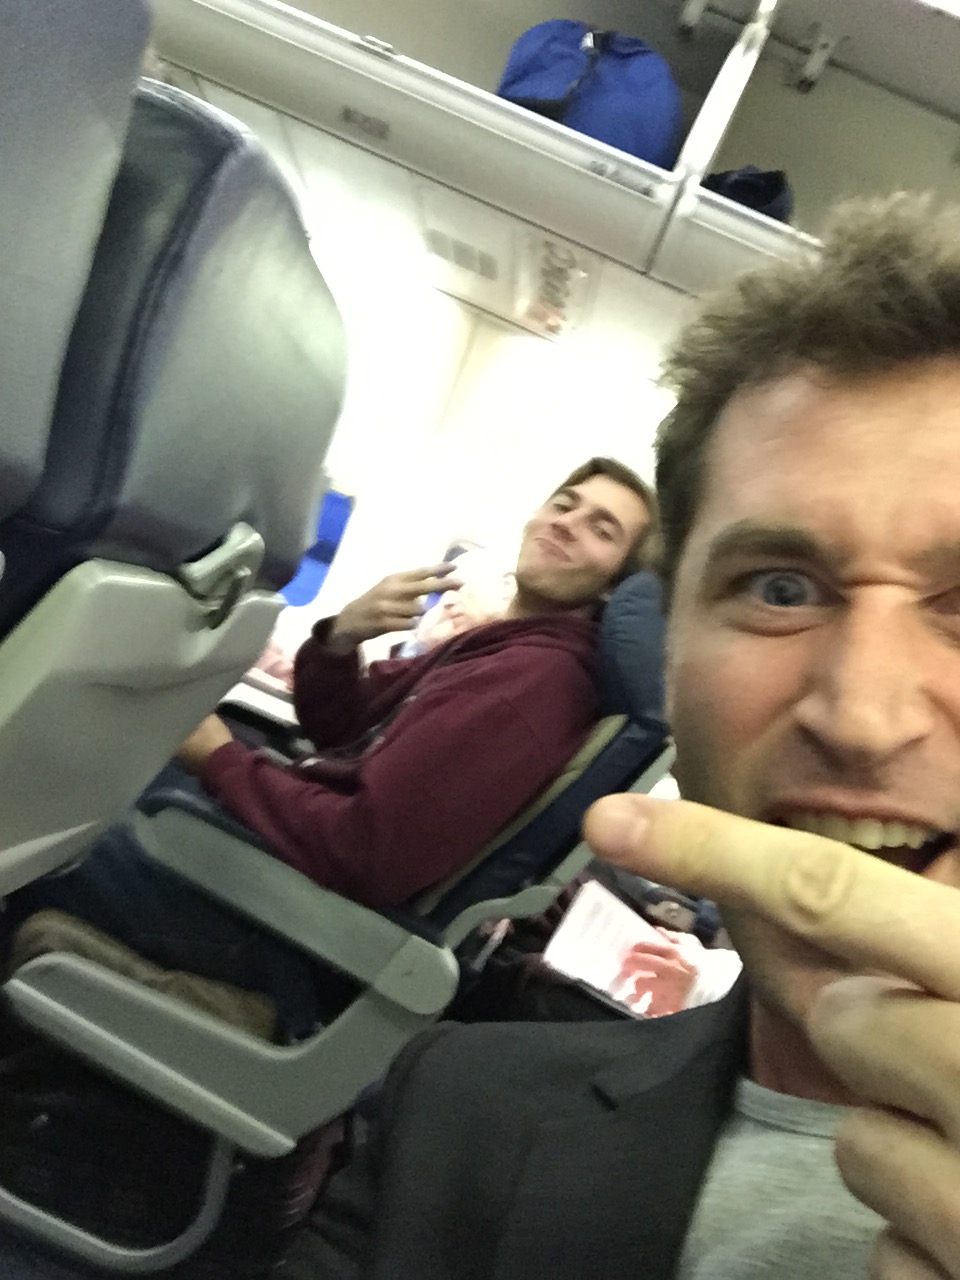 London Keyes Porn In Aeroplane - Dick Pics On A Plane!!!! - James Deen Blog